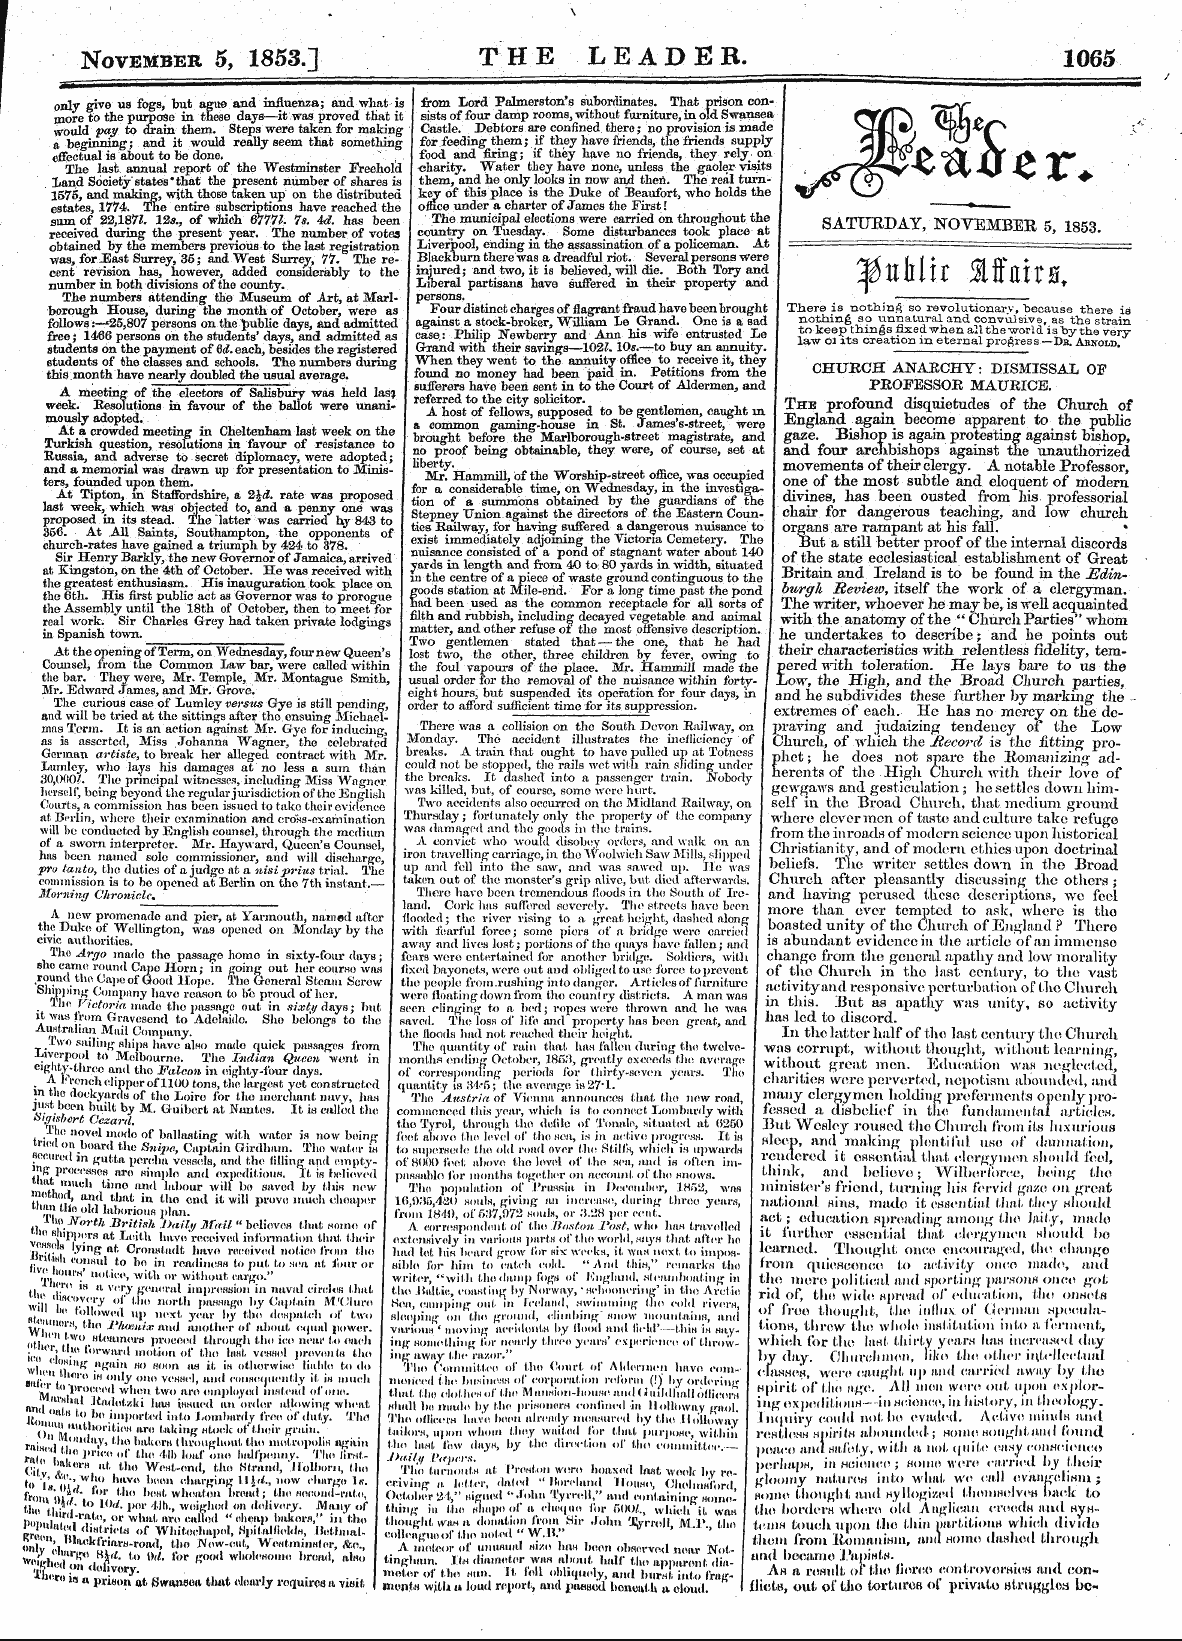 Leader (1850-1860): jS F Y, Country edition - Saturday, November 5, 1853.